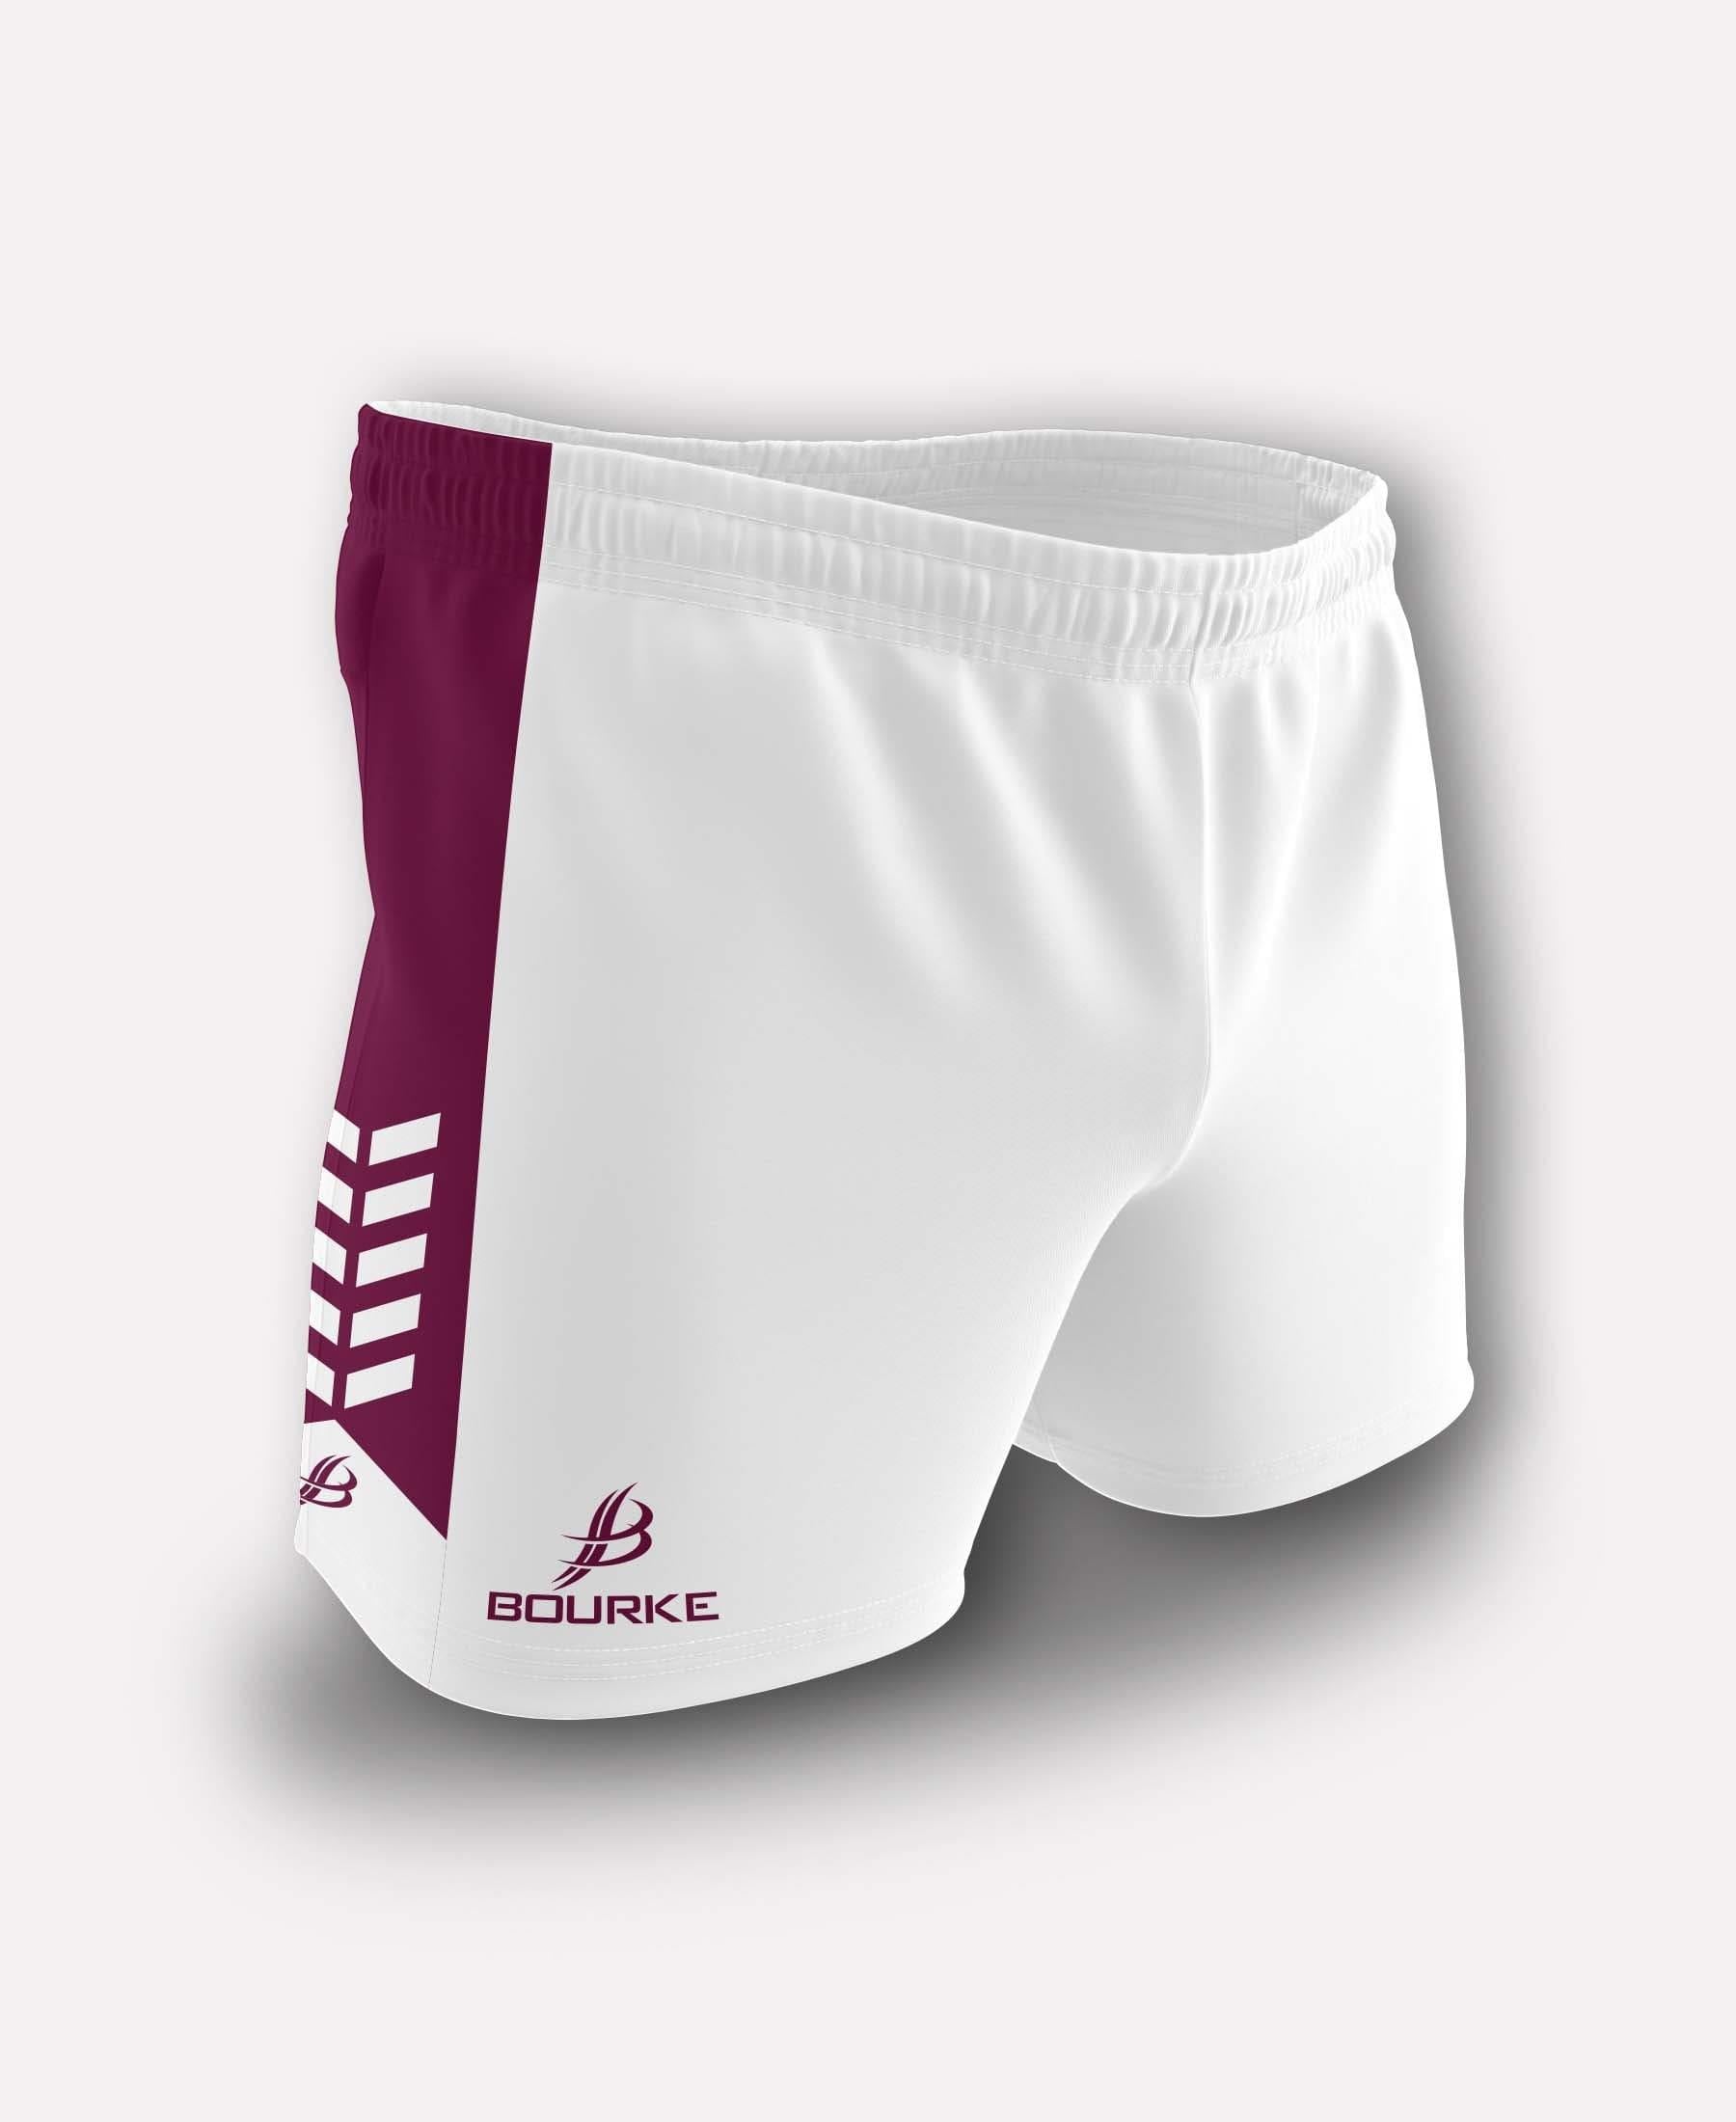 Chevron Adult Shorts (White/Maroon) - Bourke Sports Limited